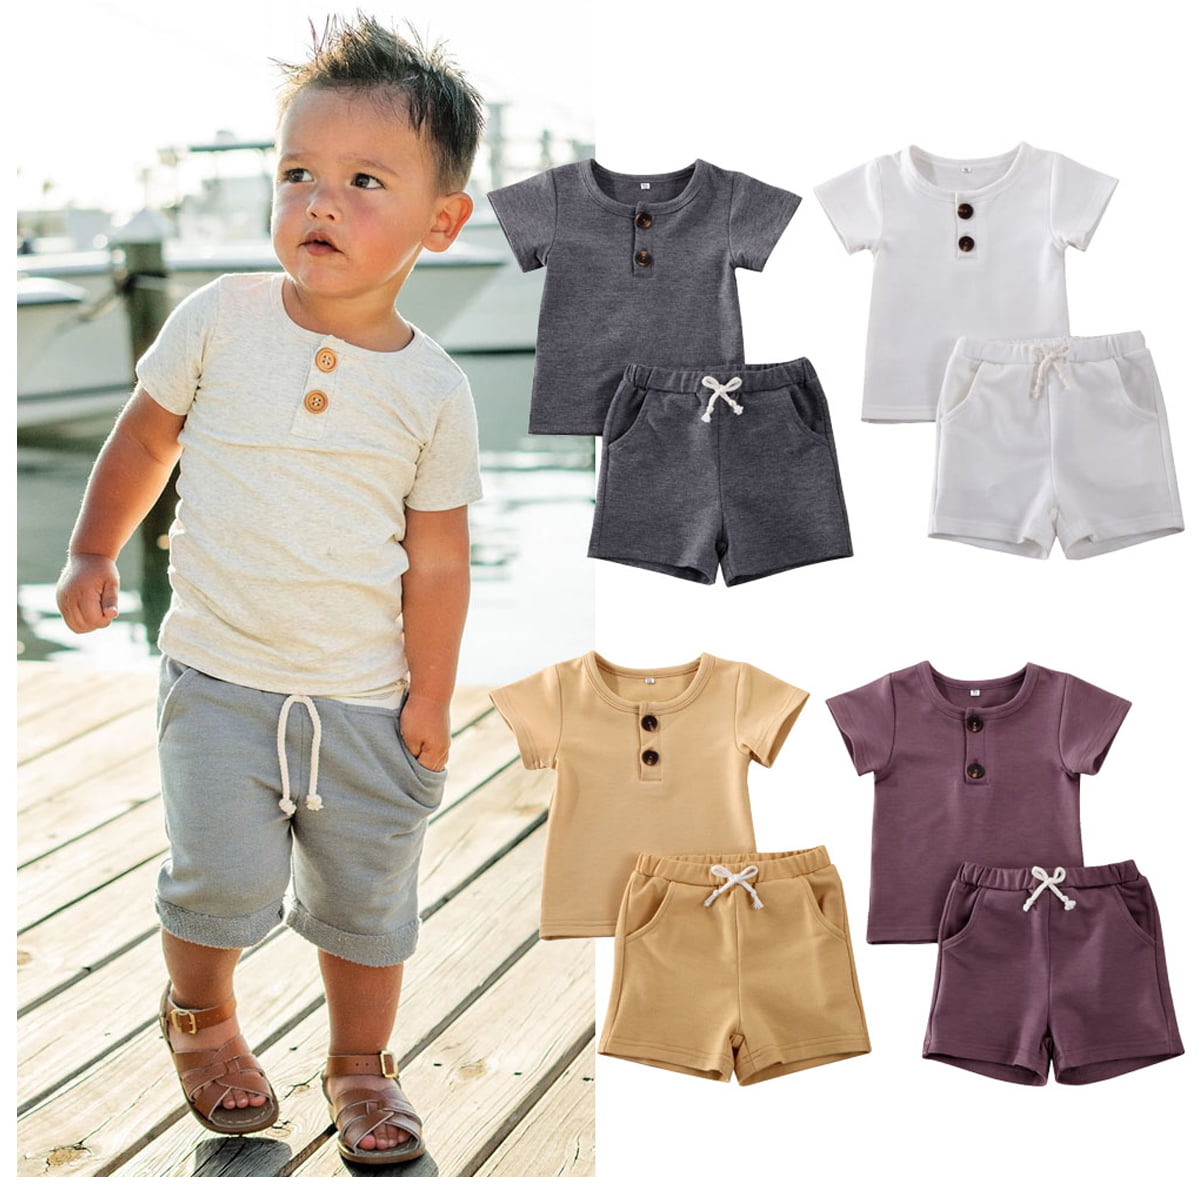 Toddler Baby Infant Boys Clothes Soild Color Vest Shorts Summer Outfit Set 